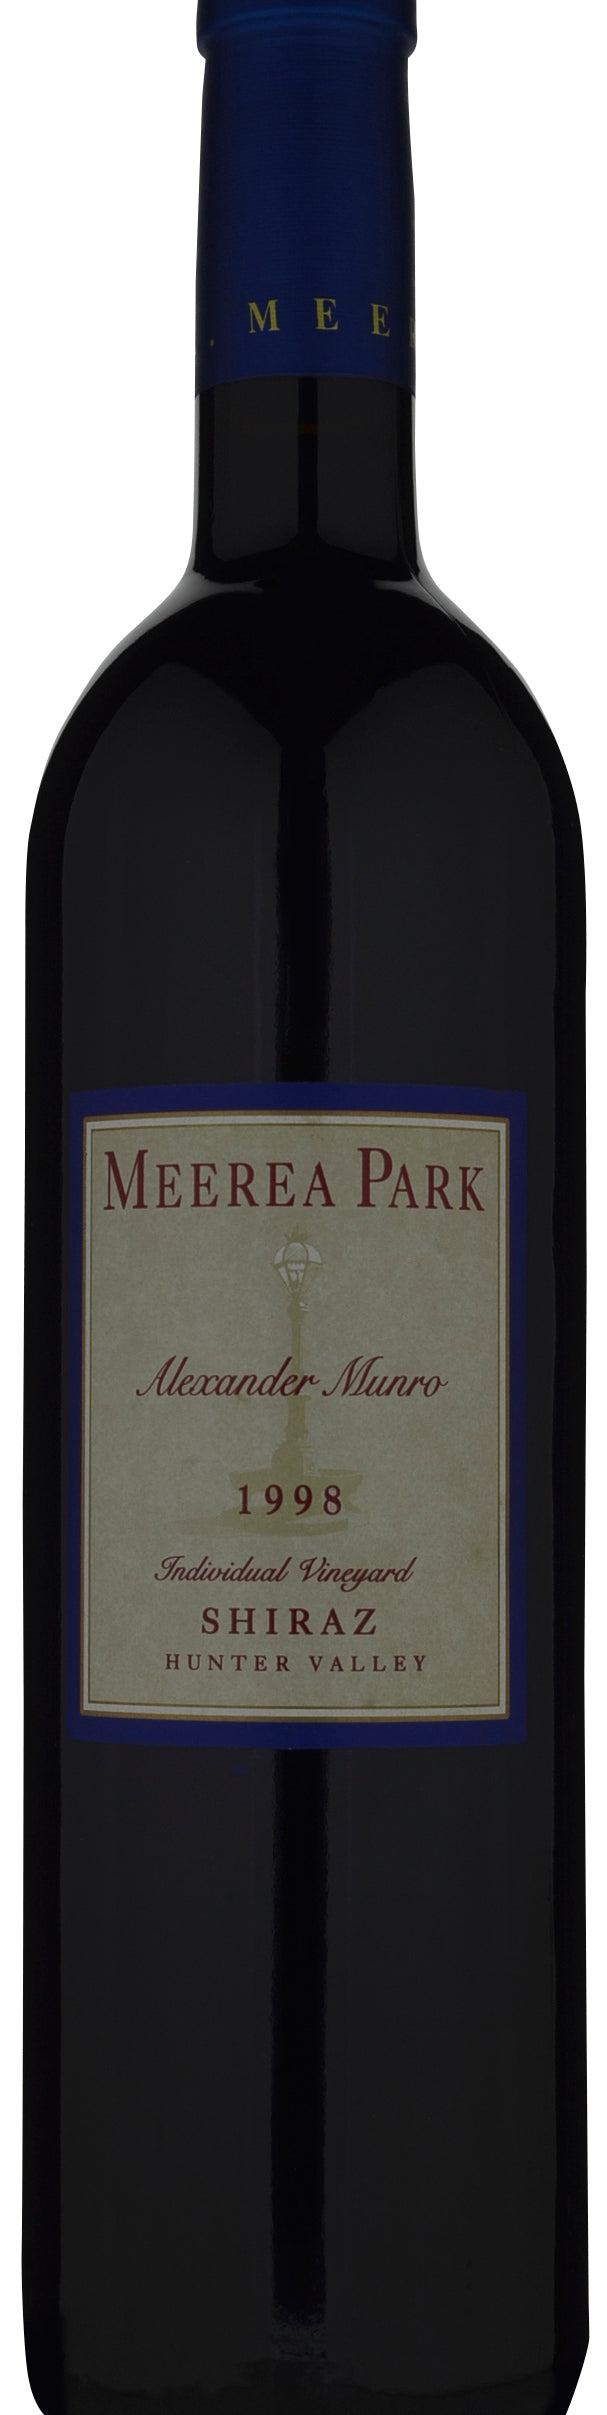 Meerea Park Alexander Munro Shiraz 1998